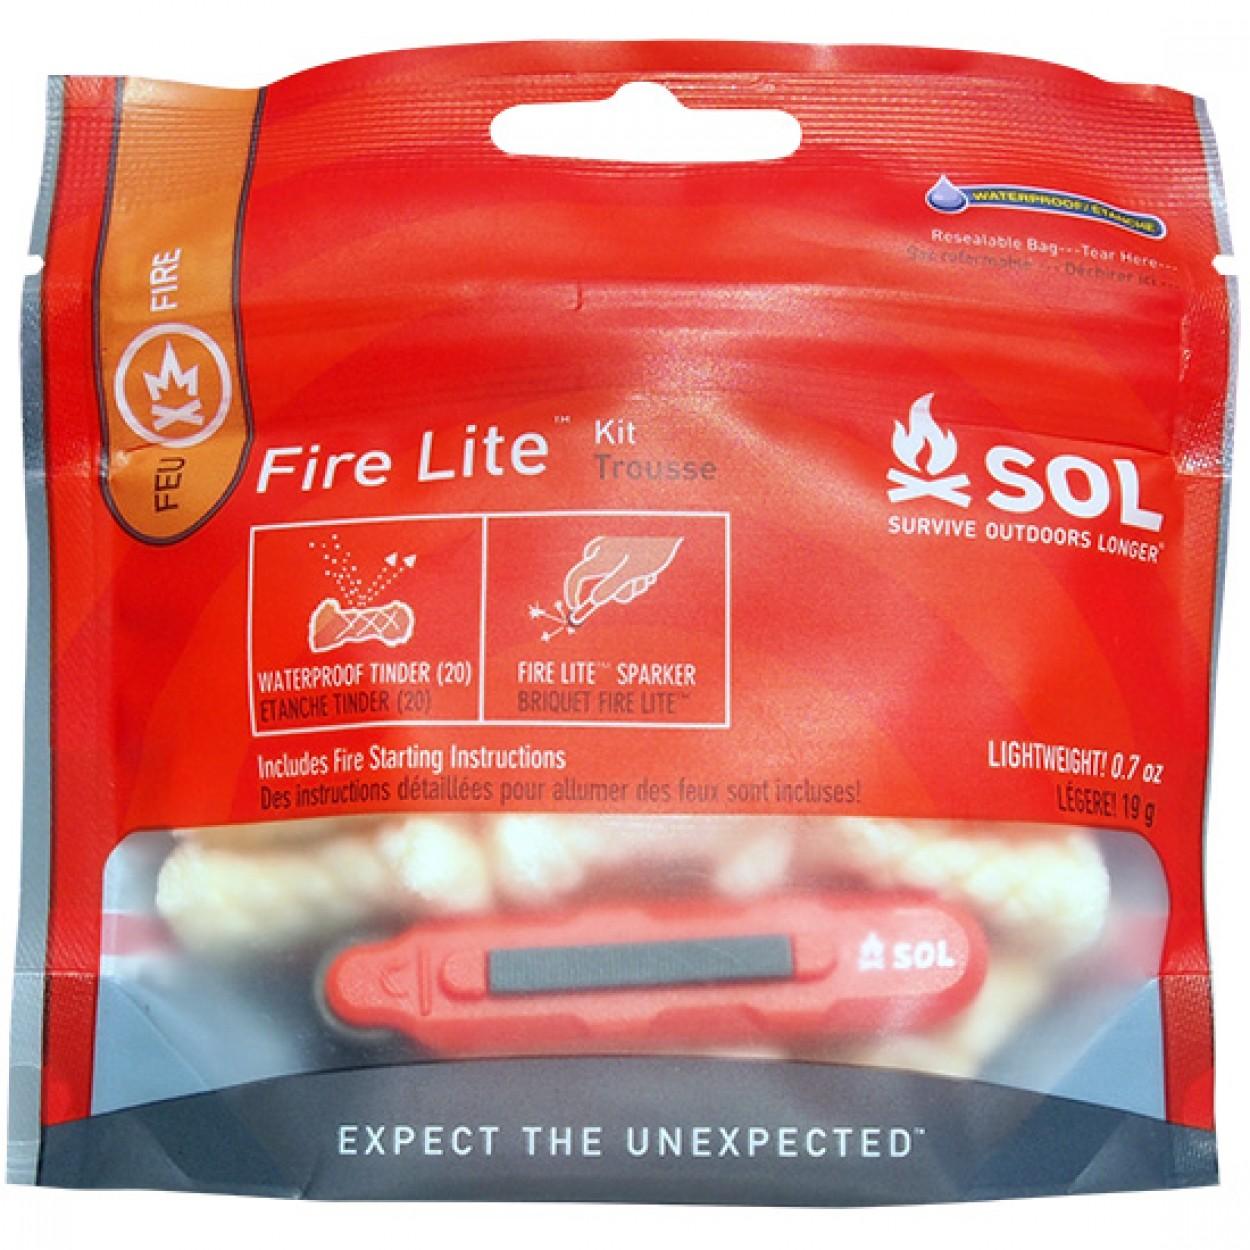 Survive Outdoors Longer Fire Lite Kit in Dry-img-0